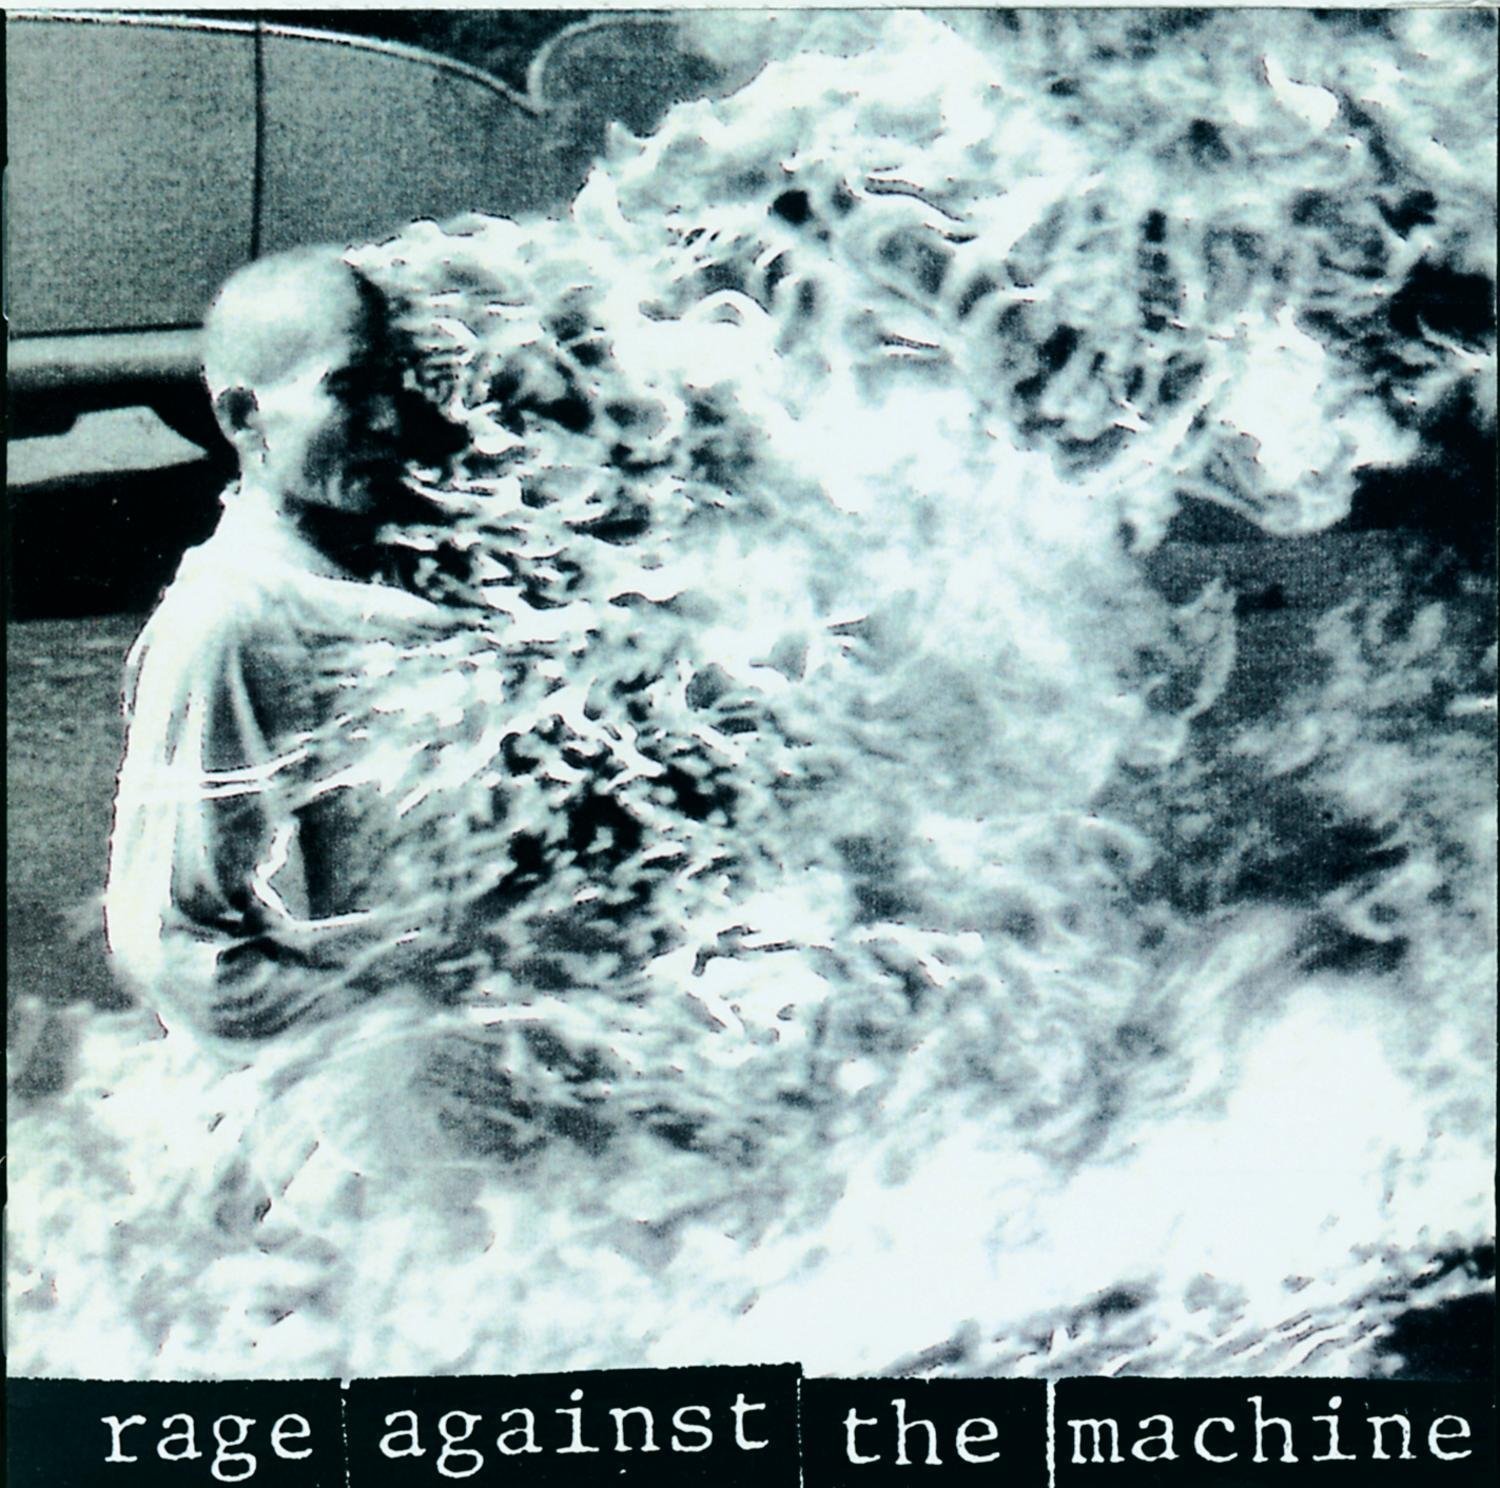 Glasbene CD Rage Against The Machine - Rage Against The Machine (CD)